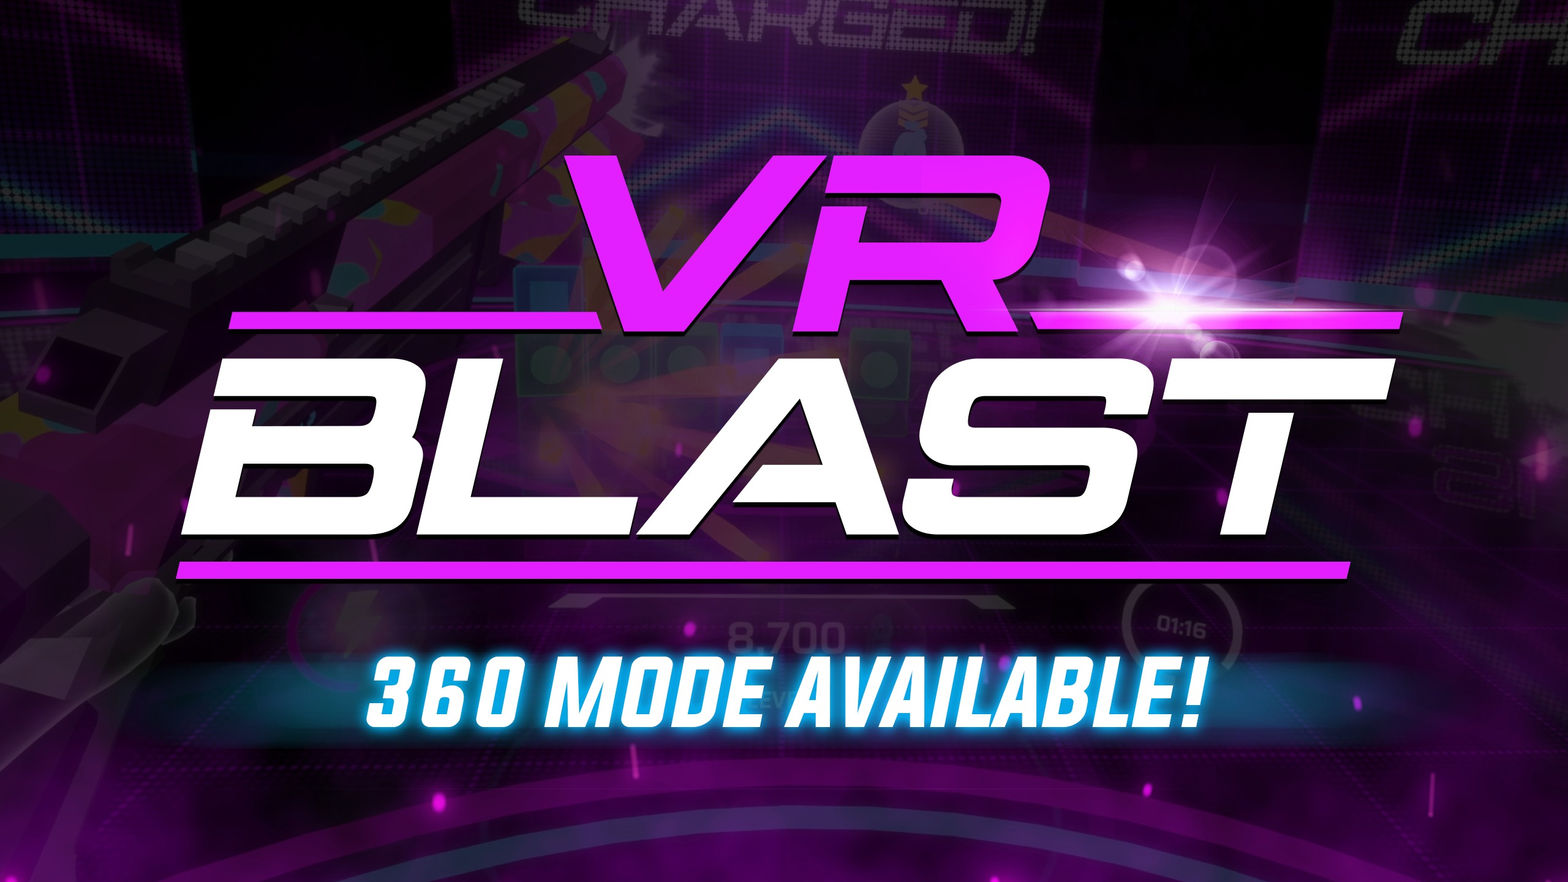 VR Blast